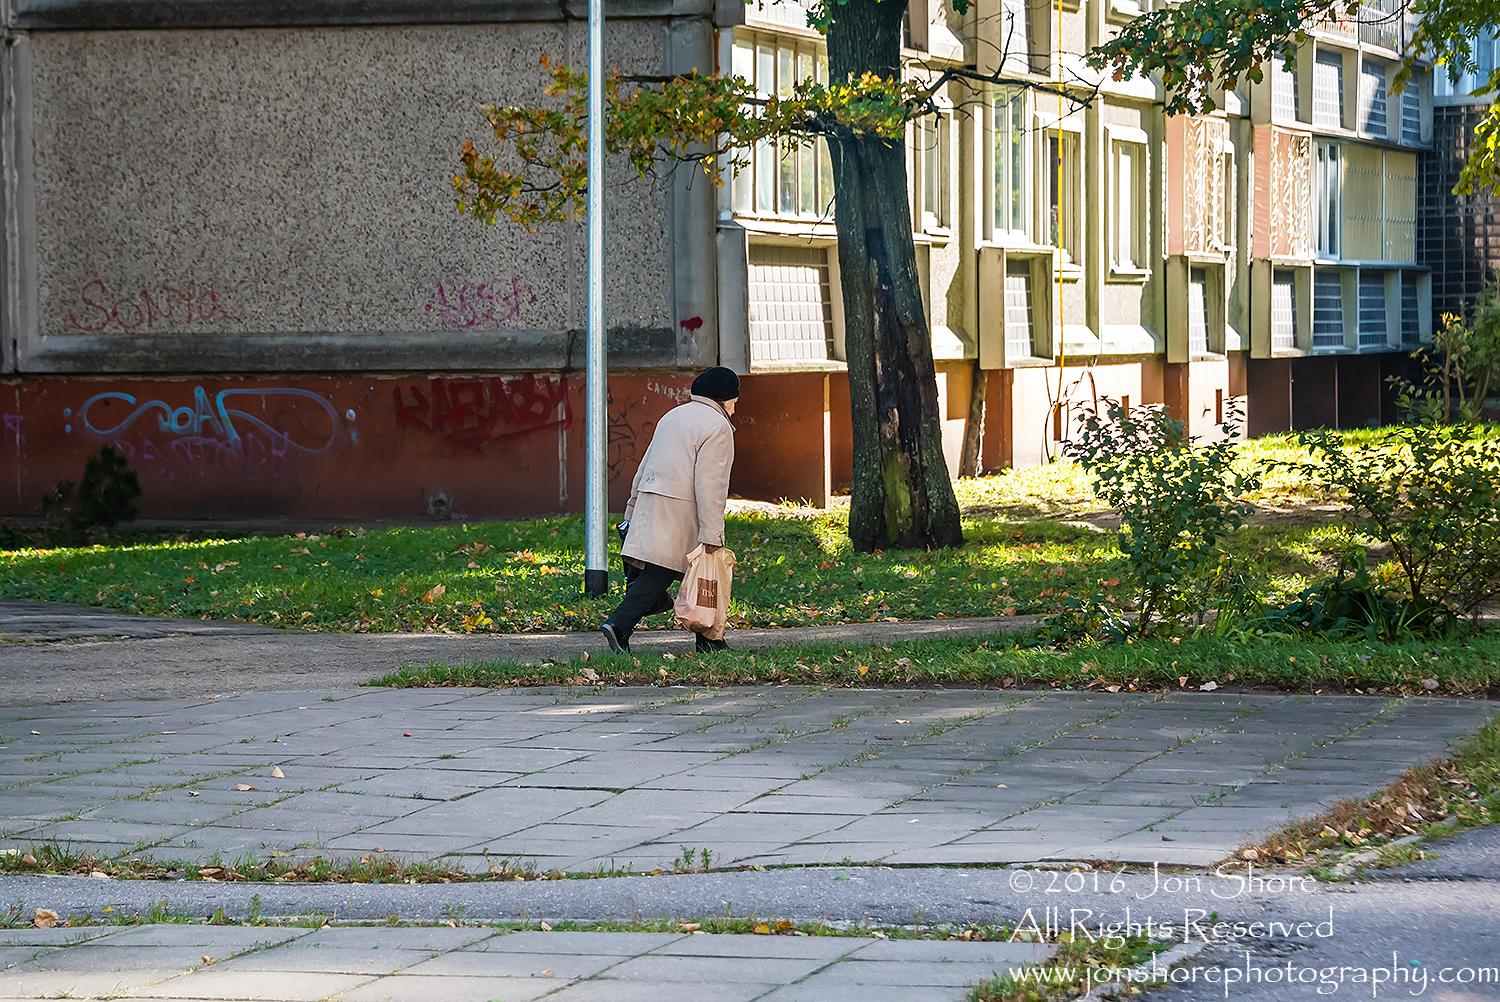 Old woman walking with bag. Zolitude, Latvia. Nikkor 200mm